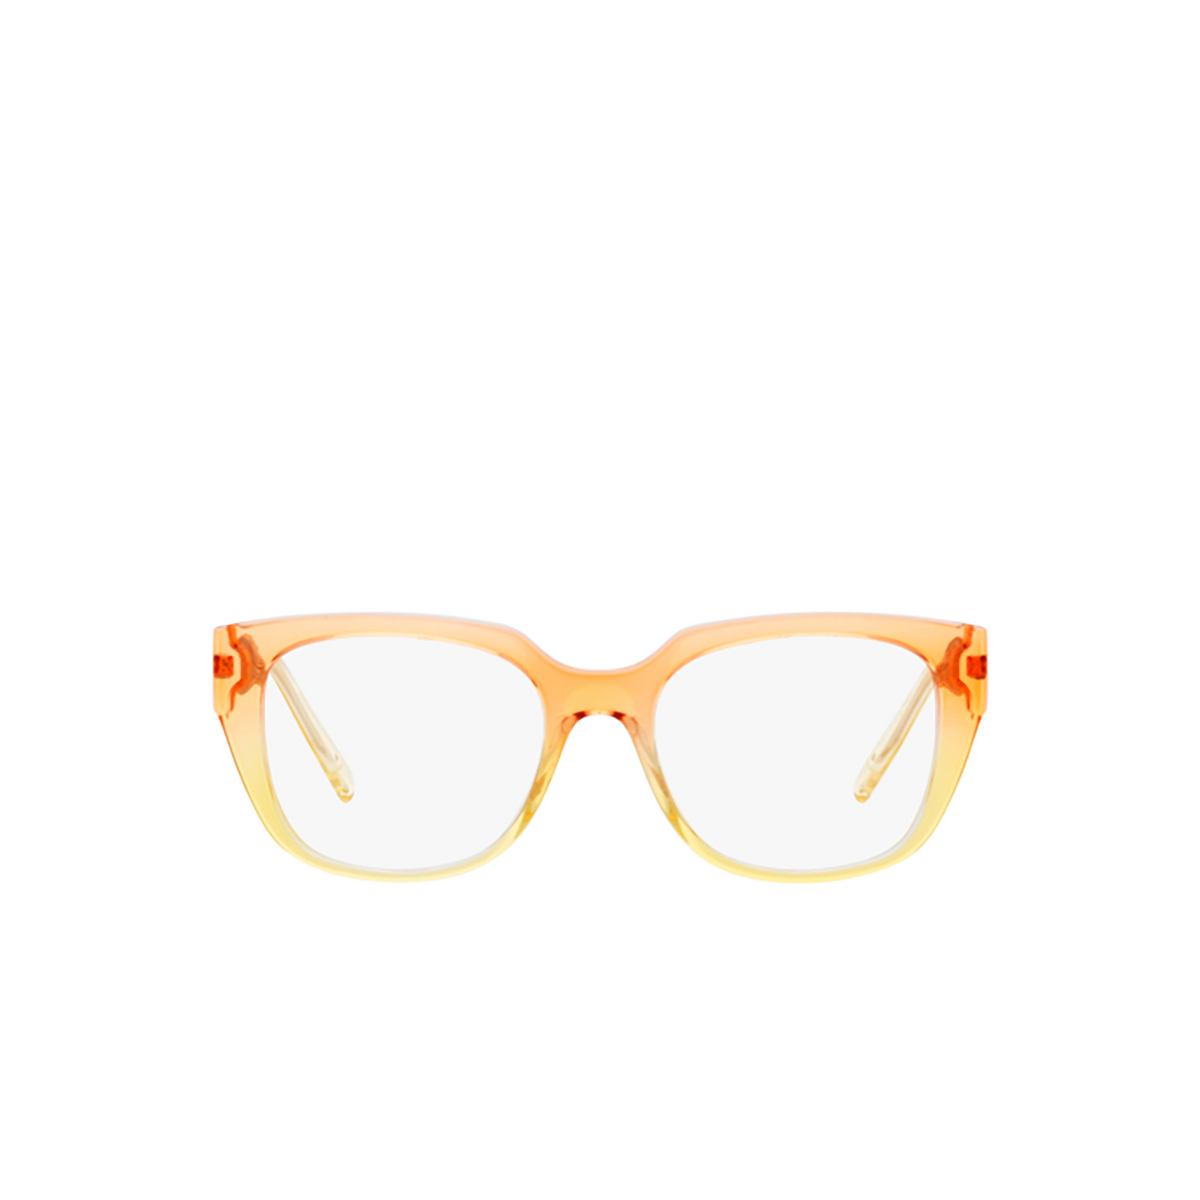 Dolce & Gabbana DG5087 Eyeglasses 3387 Gradient Orange - front view